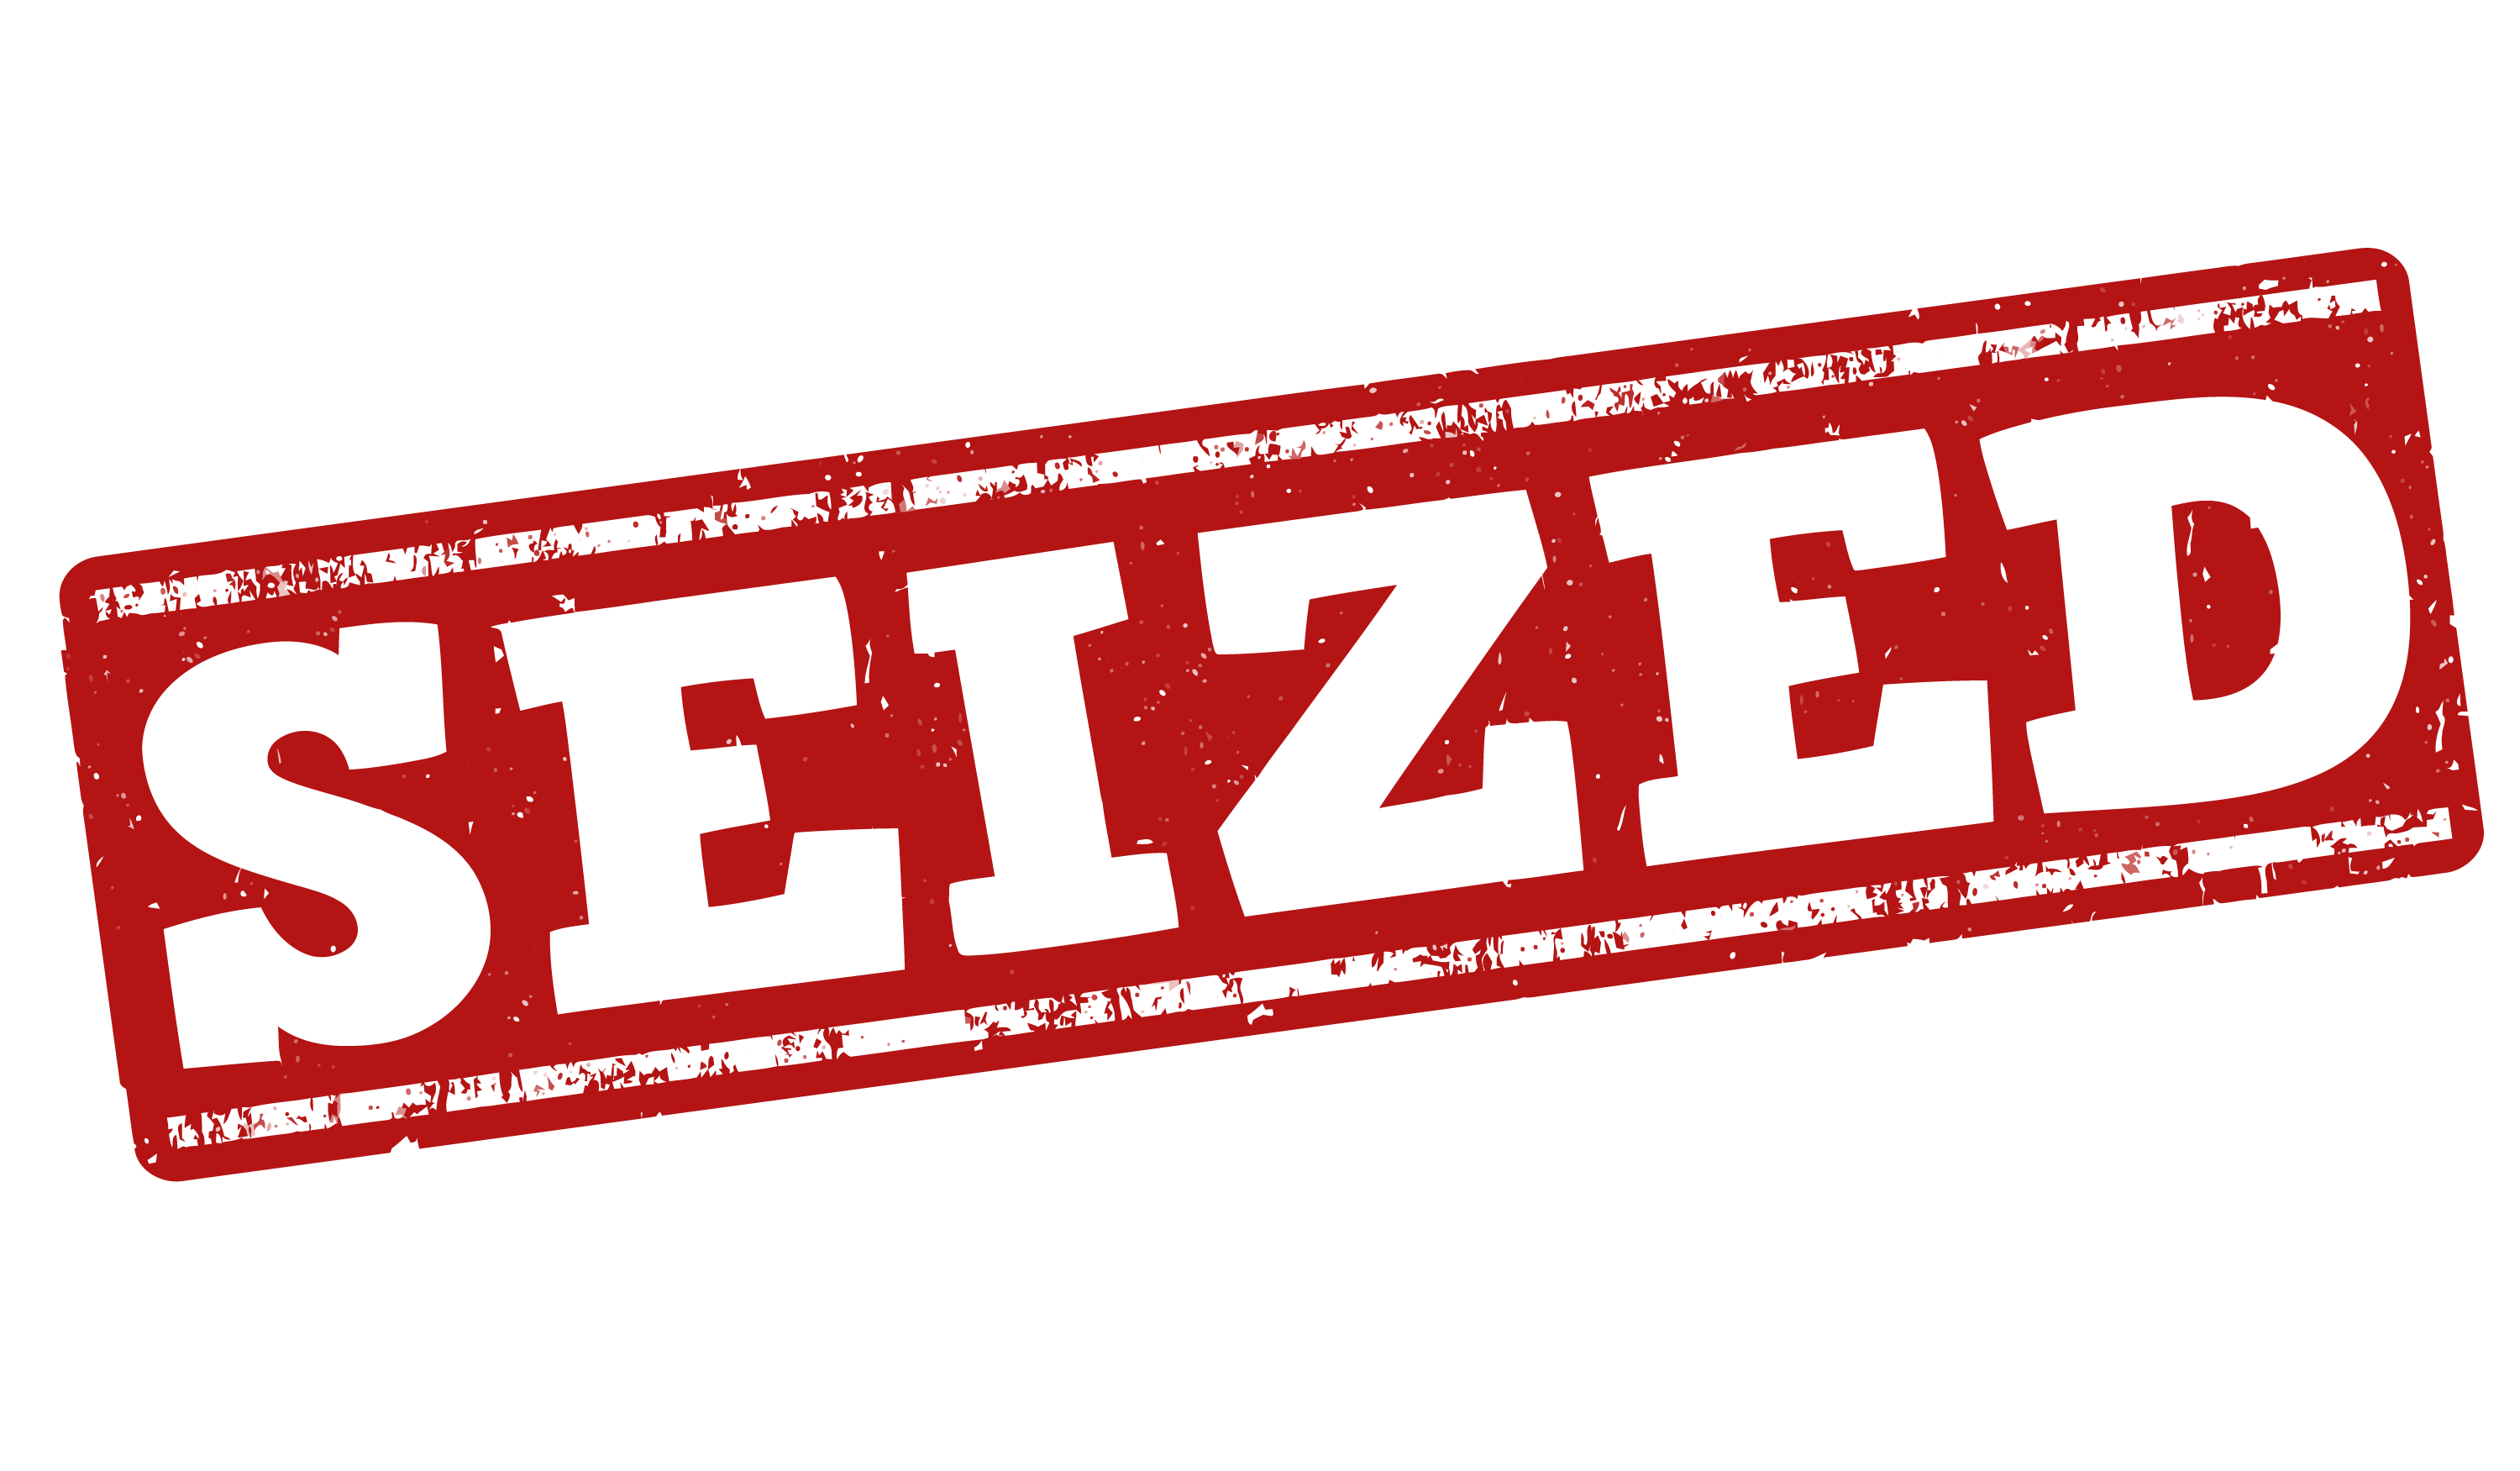 Seized